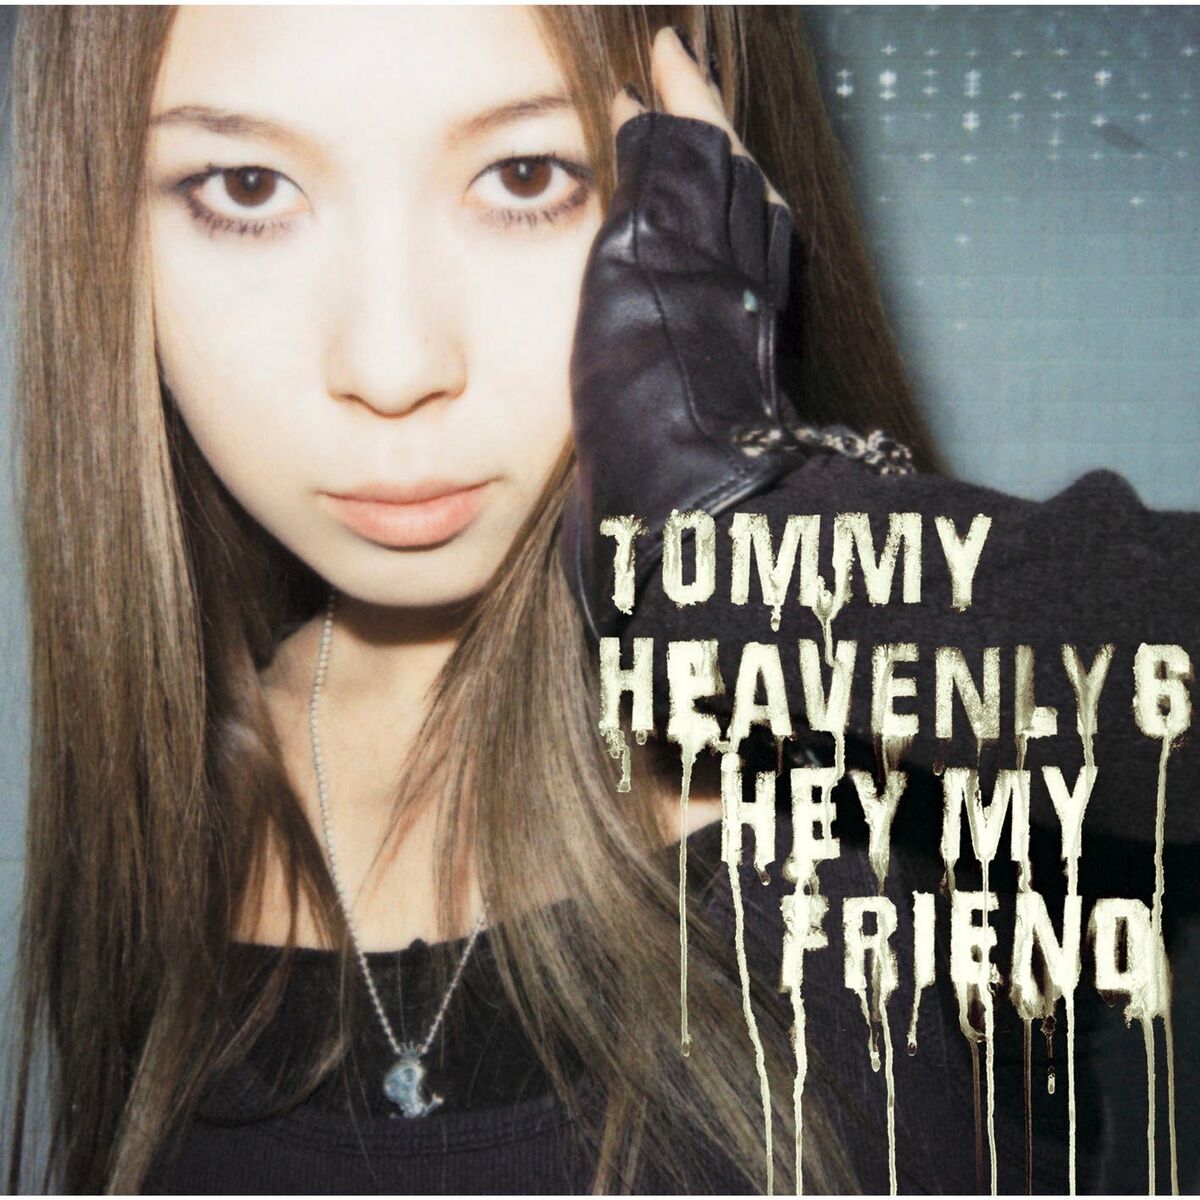 Tommy heavenly6: albums, songs, playlists | Listen on Deezer